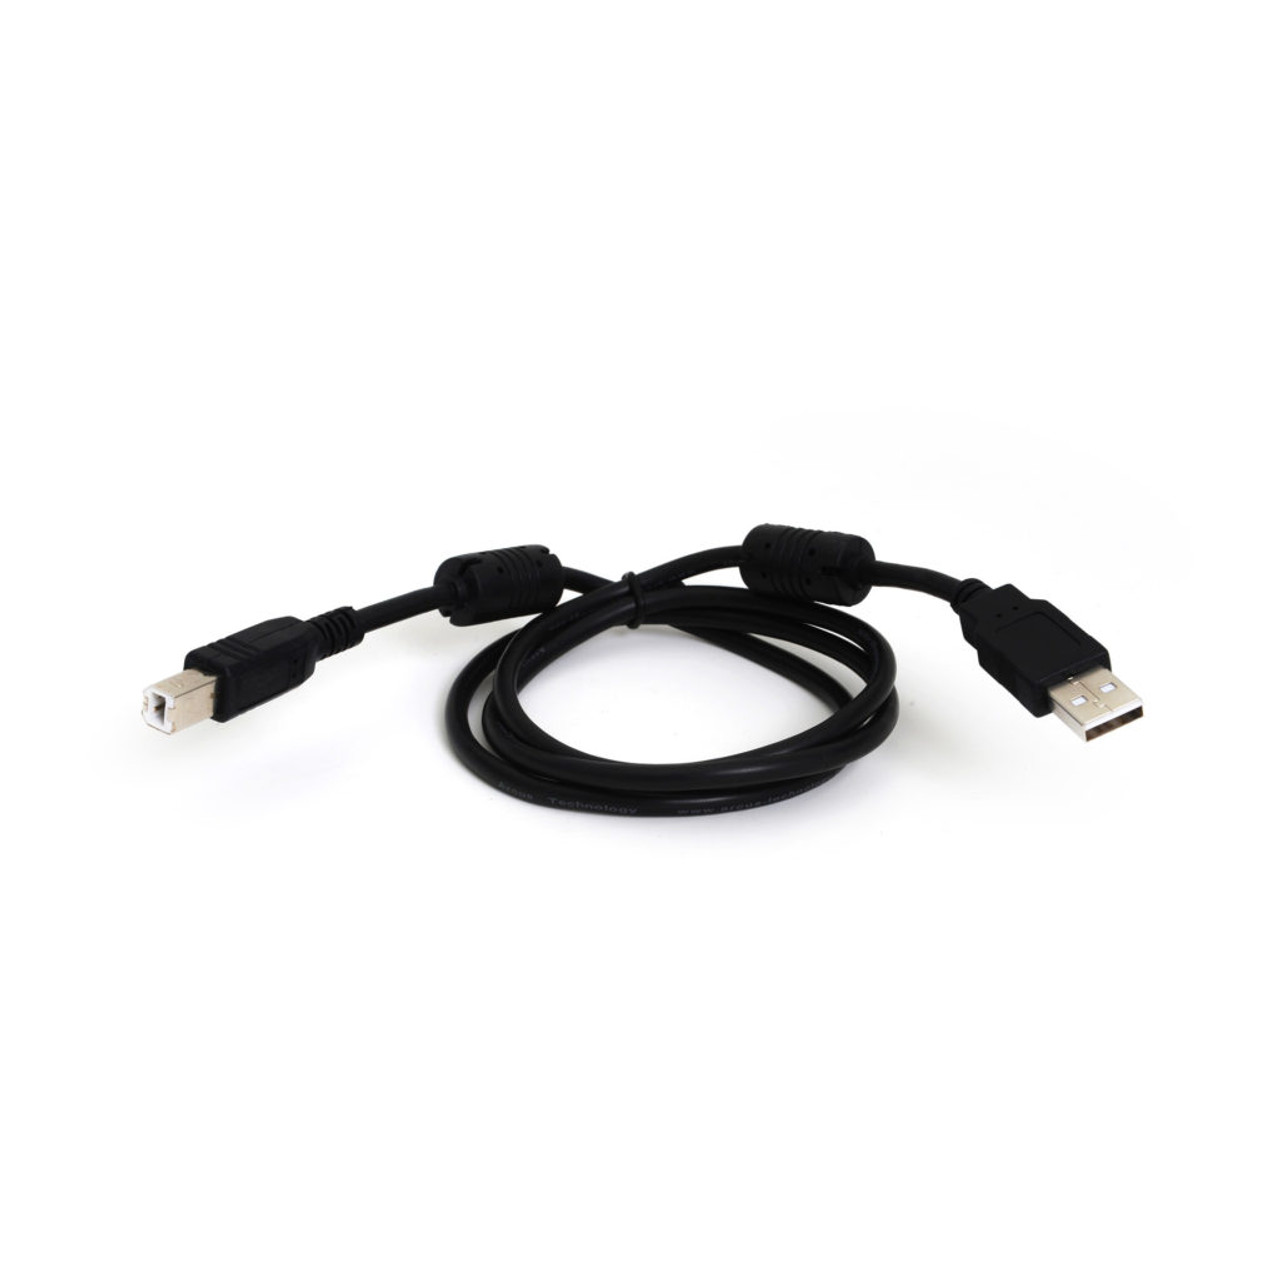 Standard USB Cable  |  CBL-USB-S